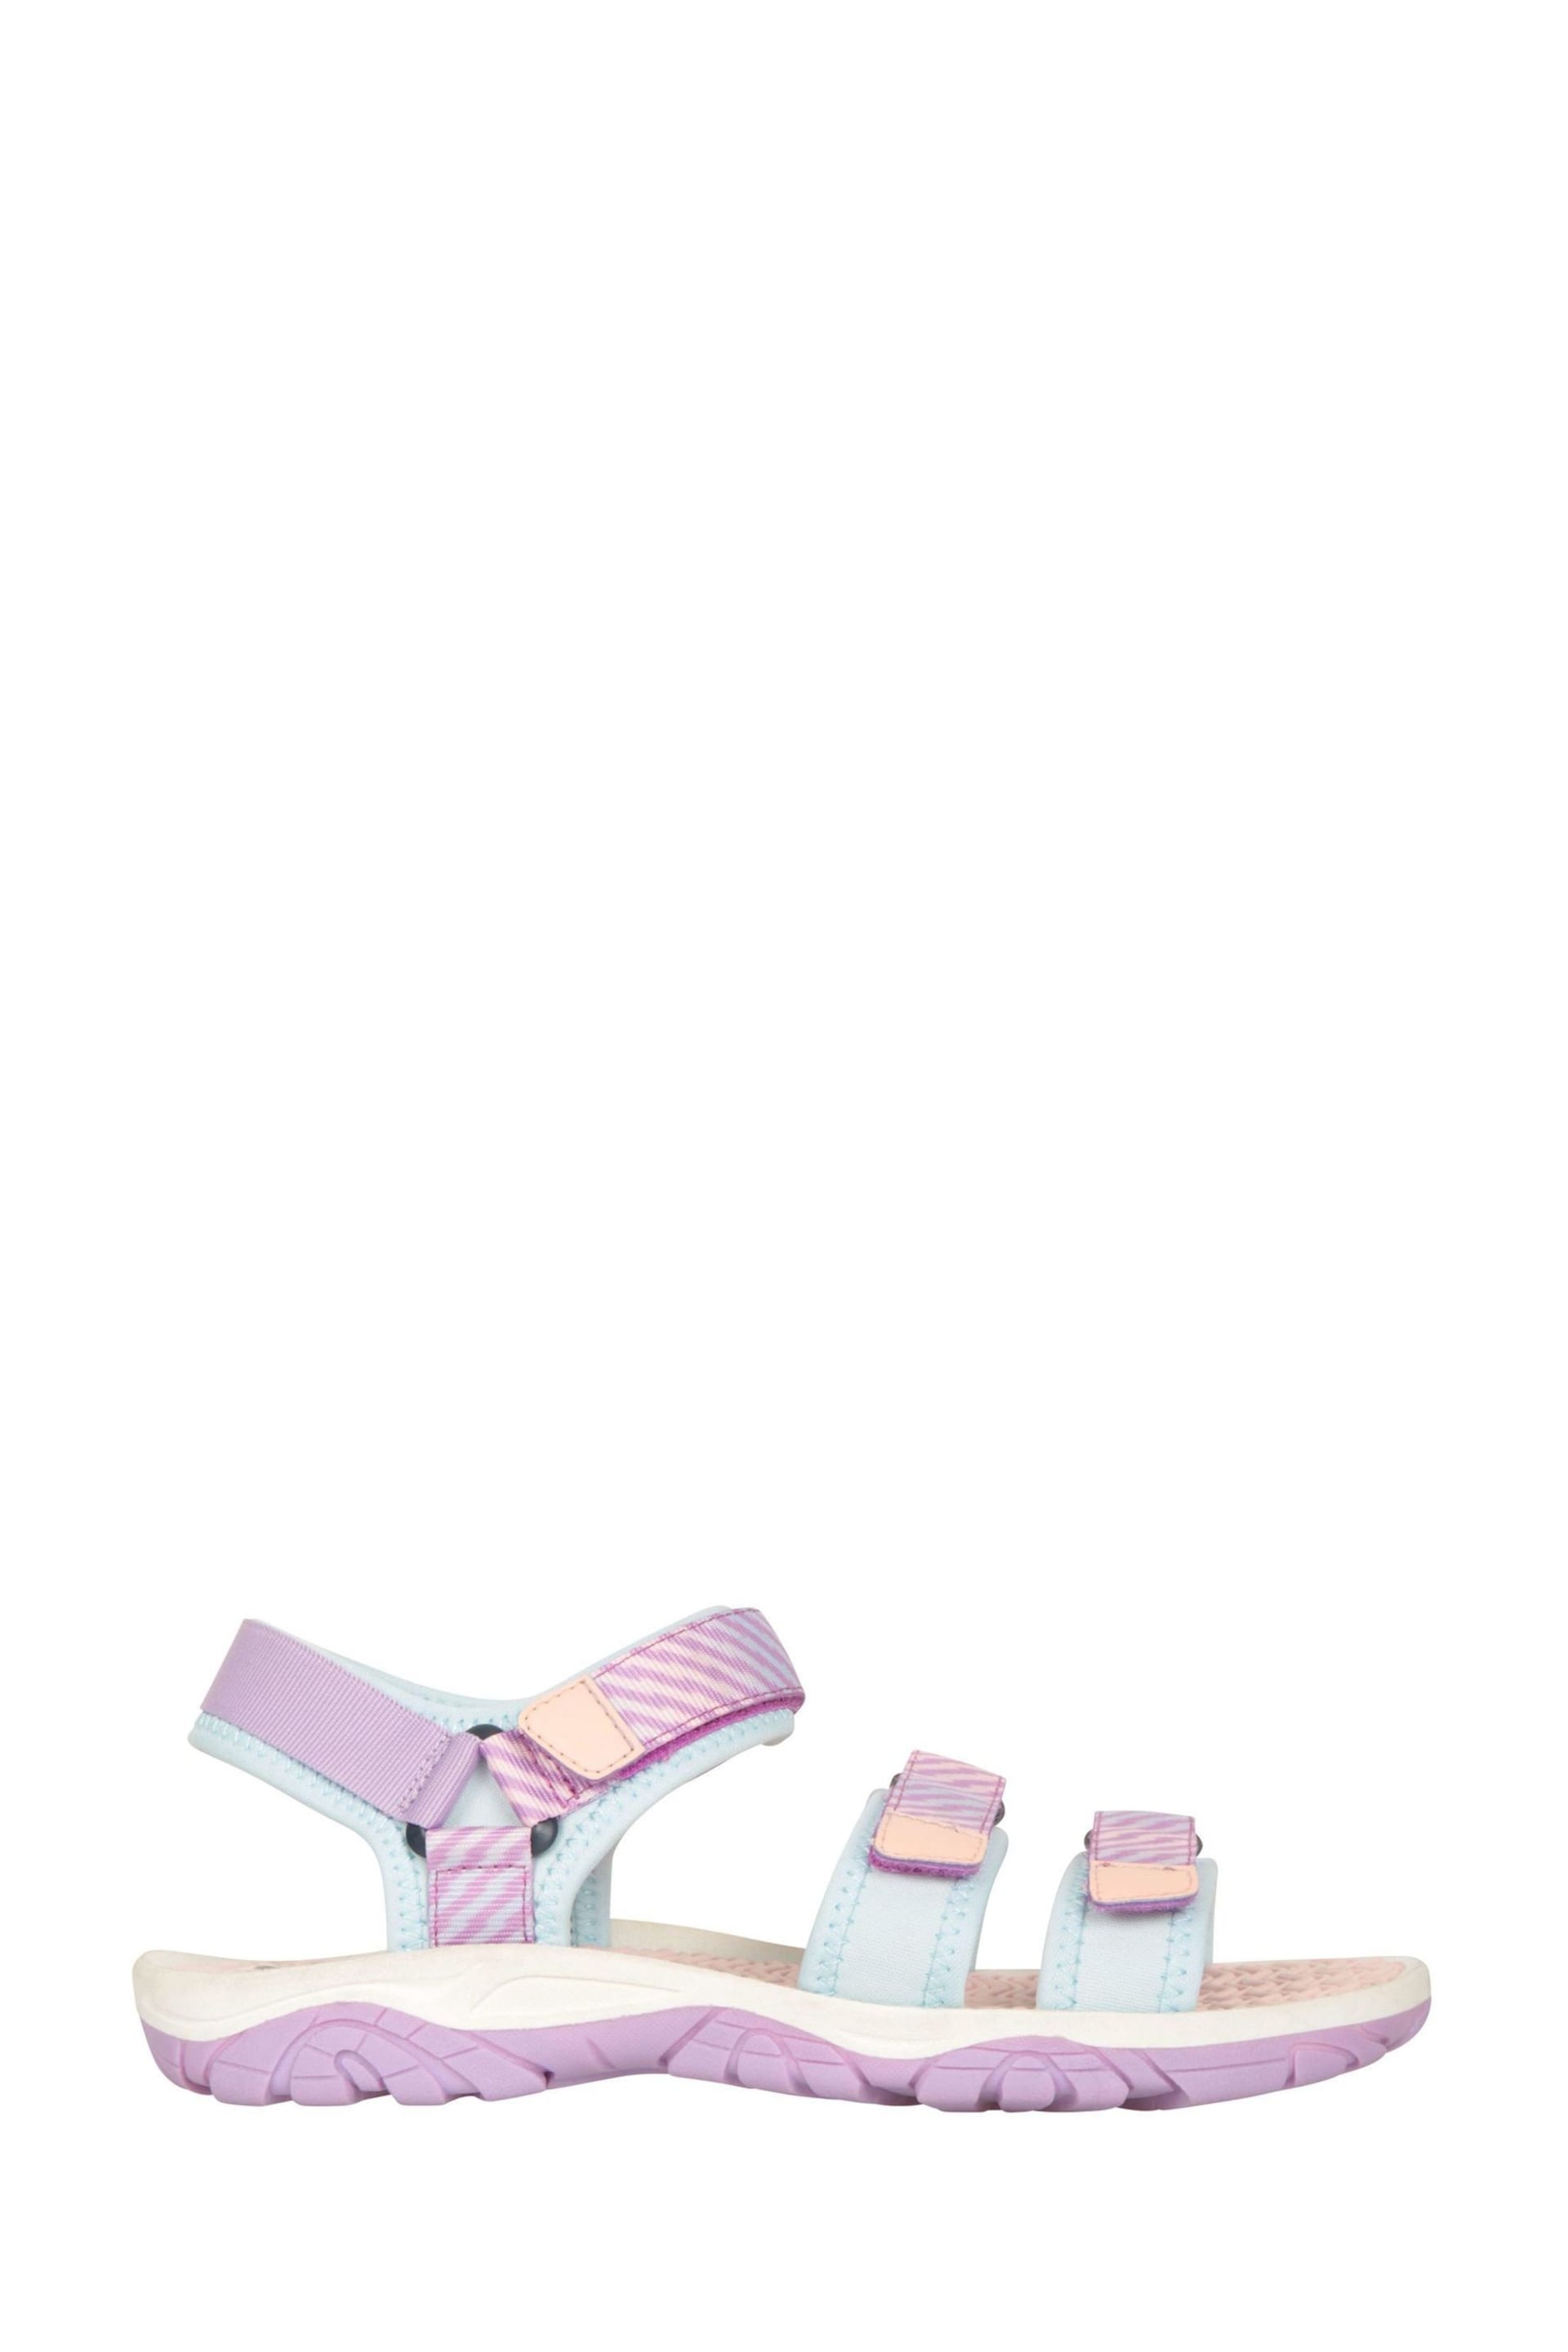 Mountain Warehouse Purple Kids 3-Strap Sandals - Image 2 of 8